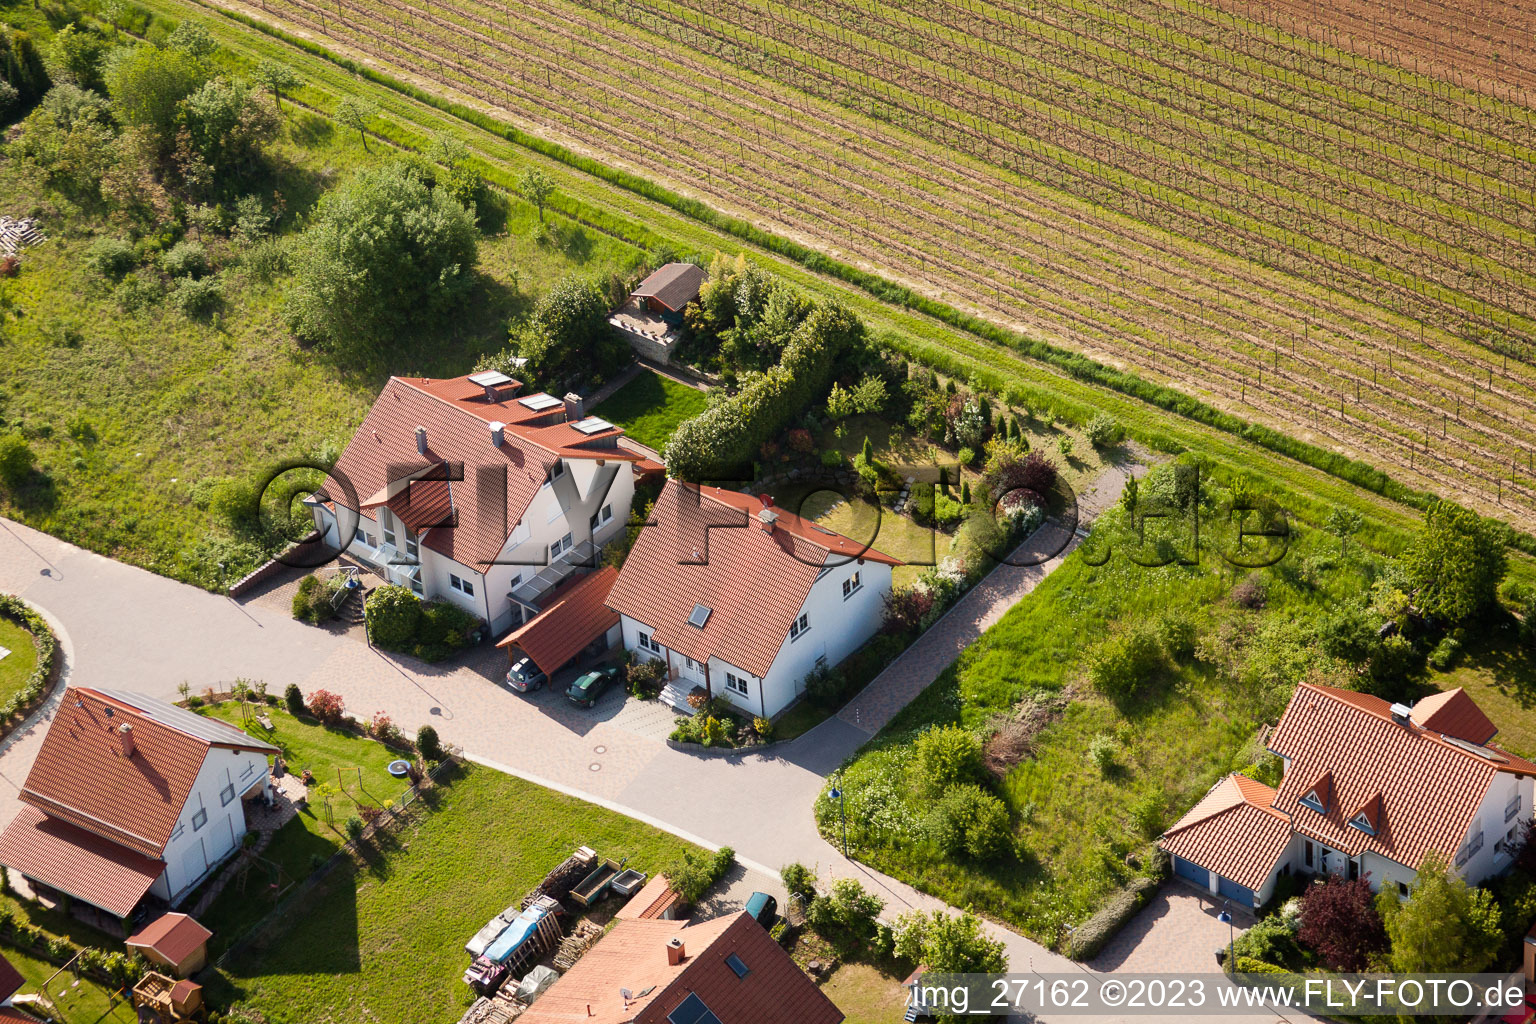 Quartier Mörzheim in Landau in der Pfalz dans le département Rhénanie-Palatinat, Allemagne du point de vue du drone